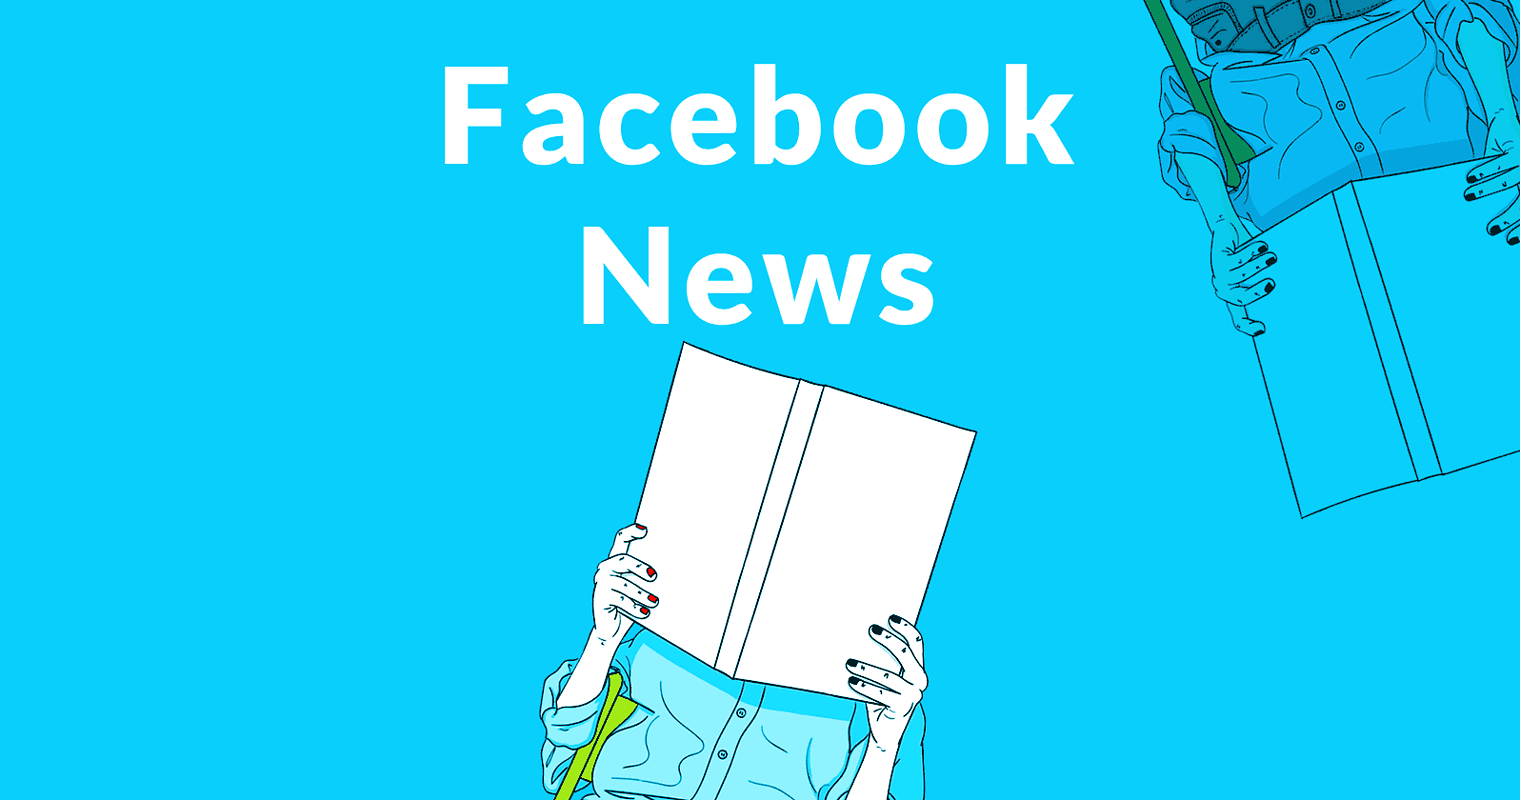 Facebook Announces Program to Help News Sites